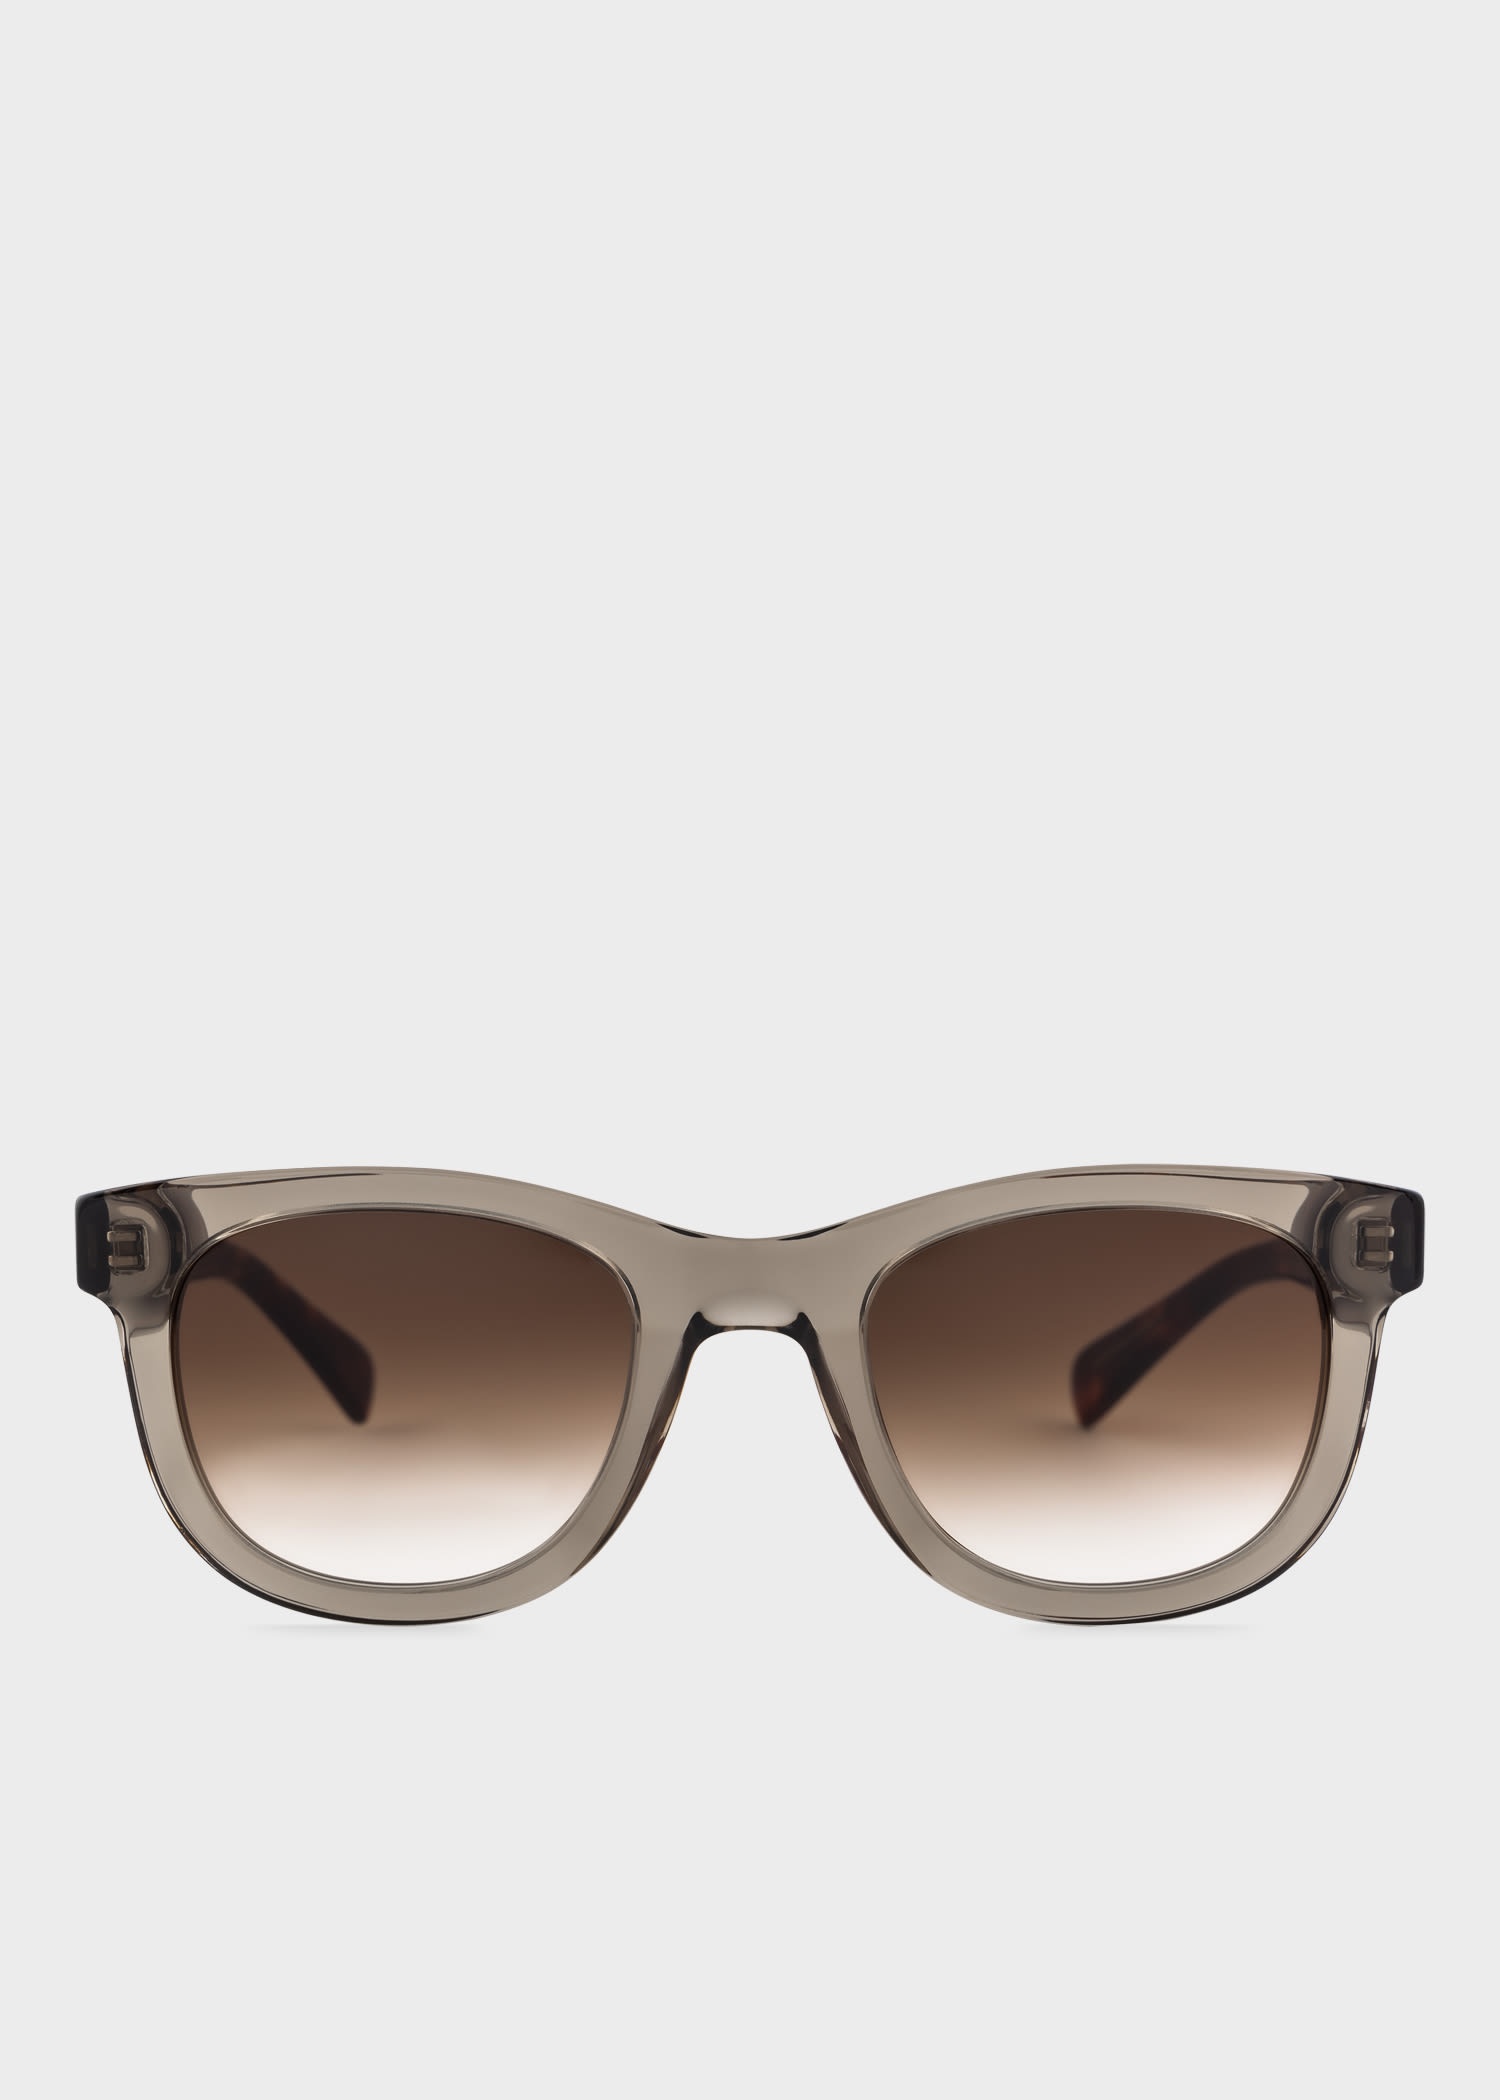 'Halons' Sunglasses - 1